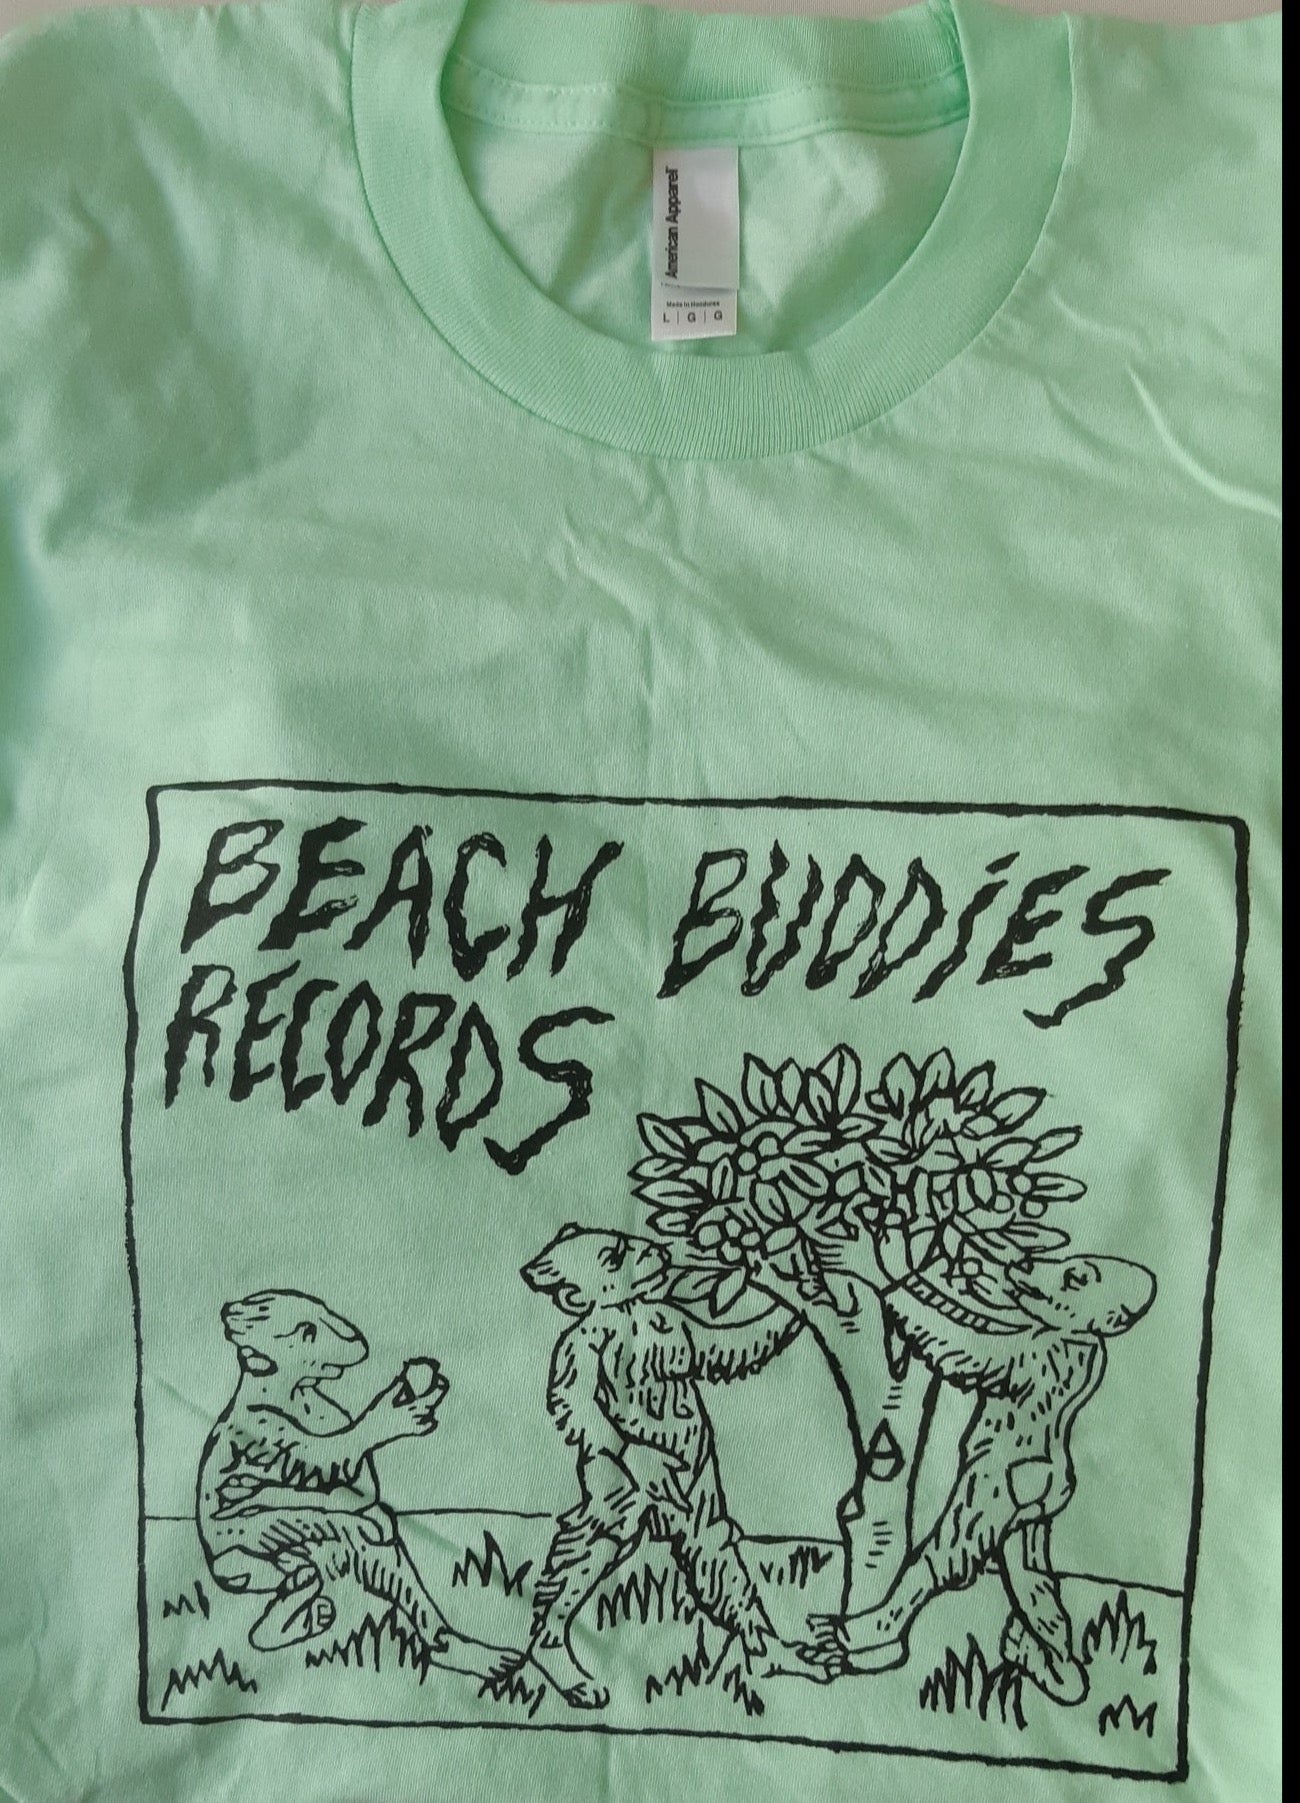 Beach Buddies Records - T-Shirt